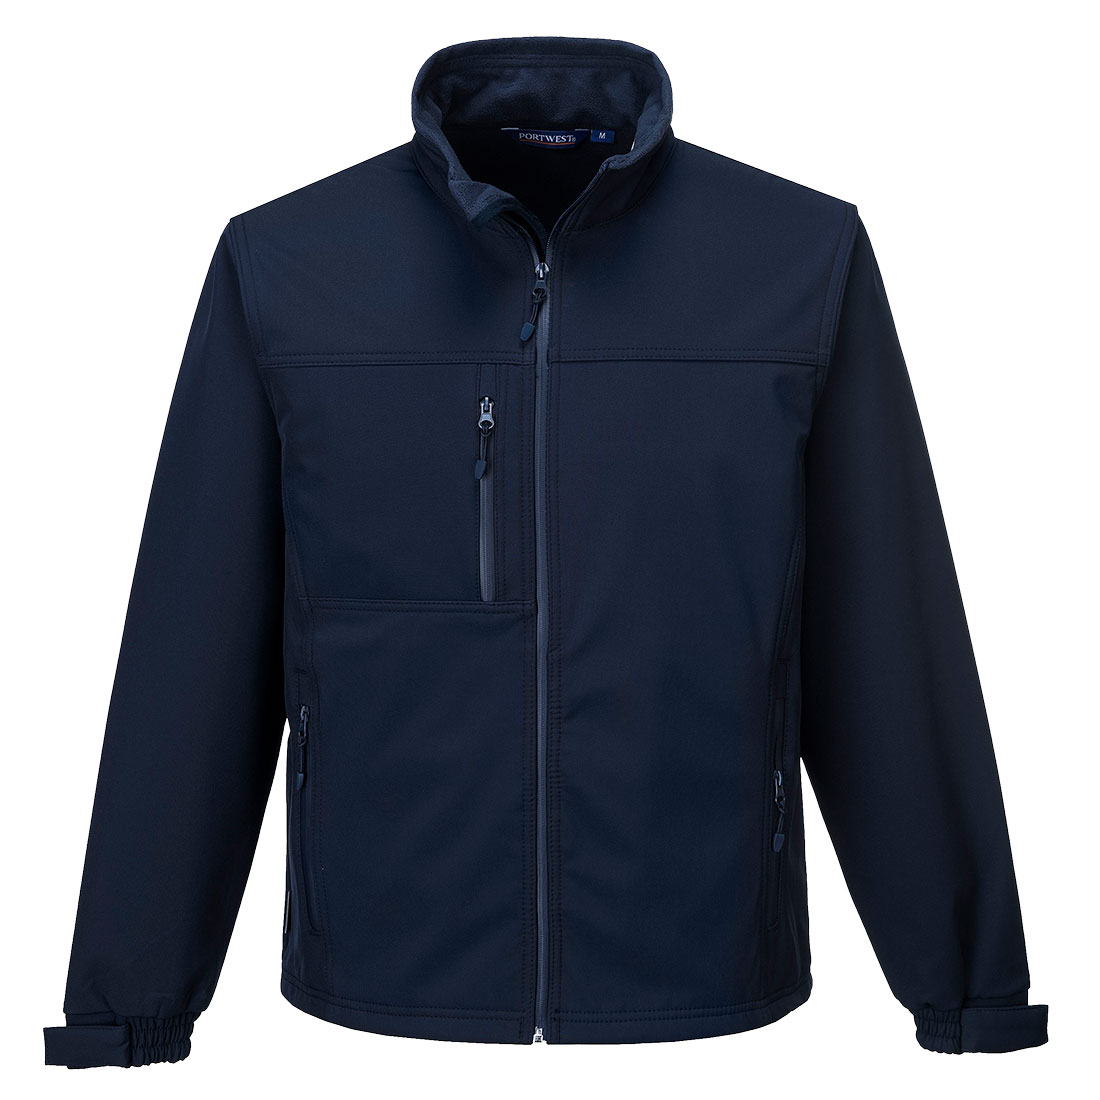 Tk50 softshell jacket (3l) - navy - medium